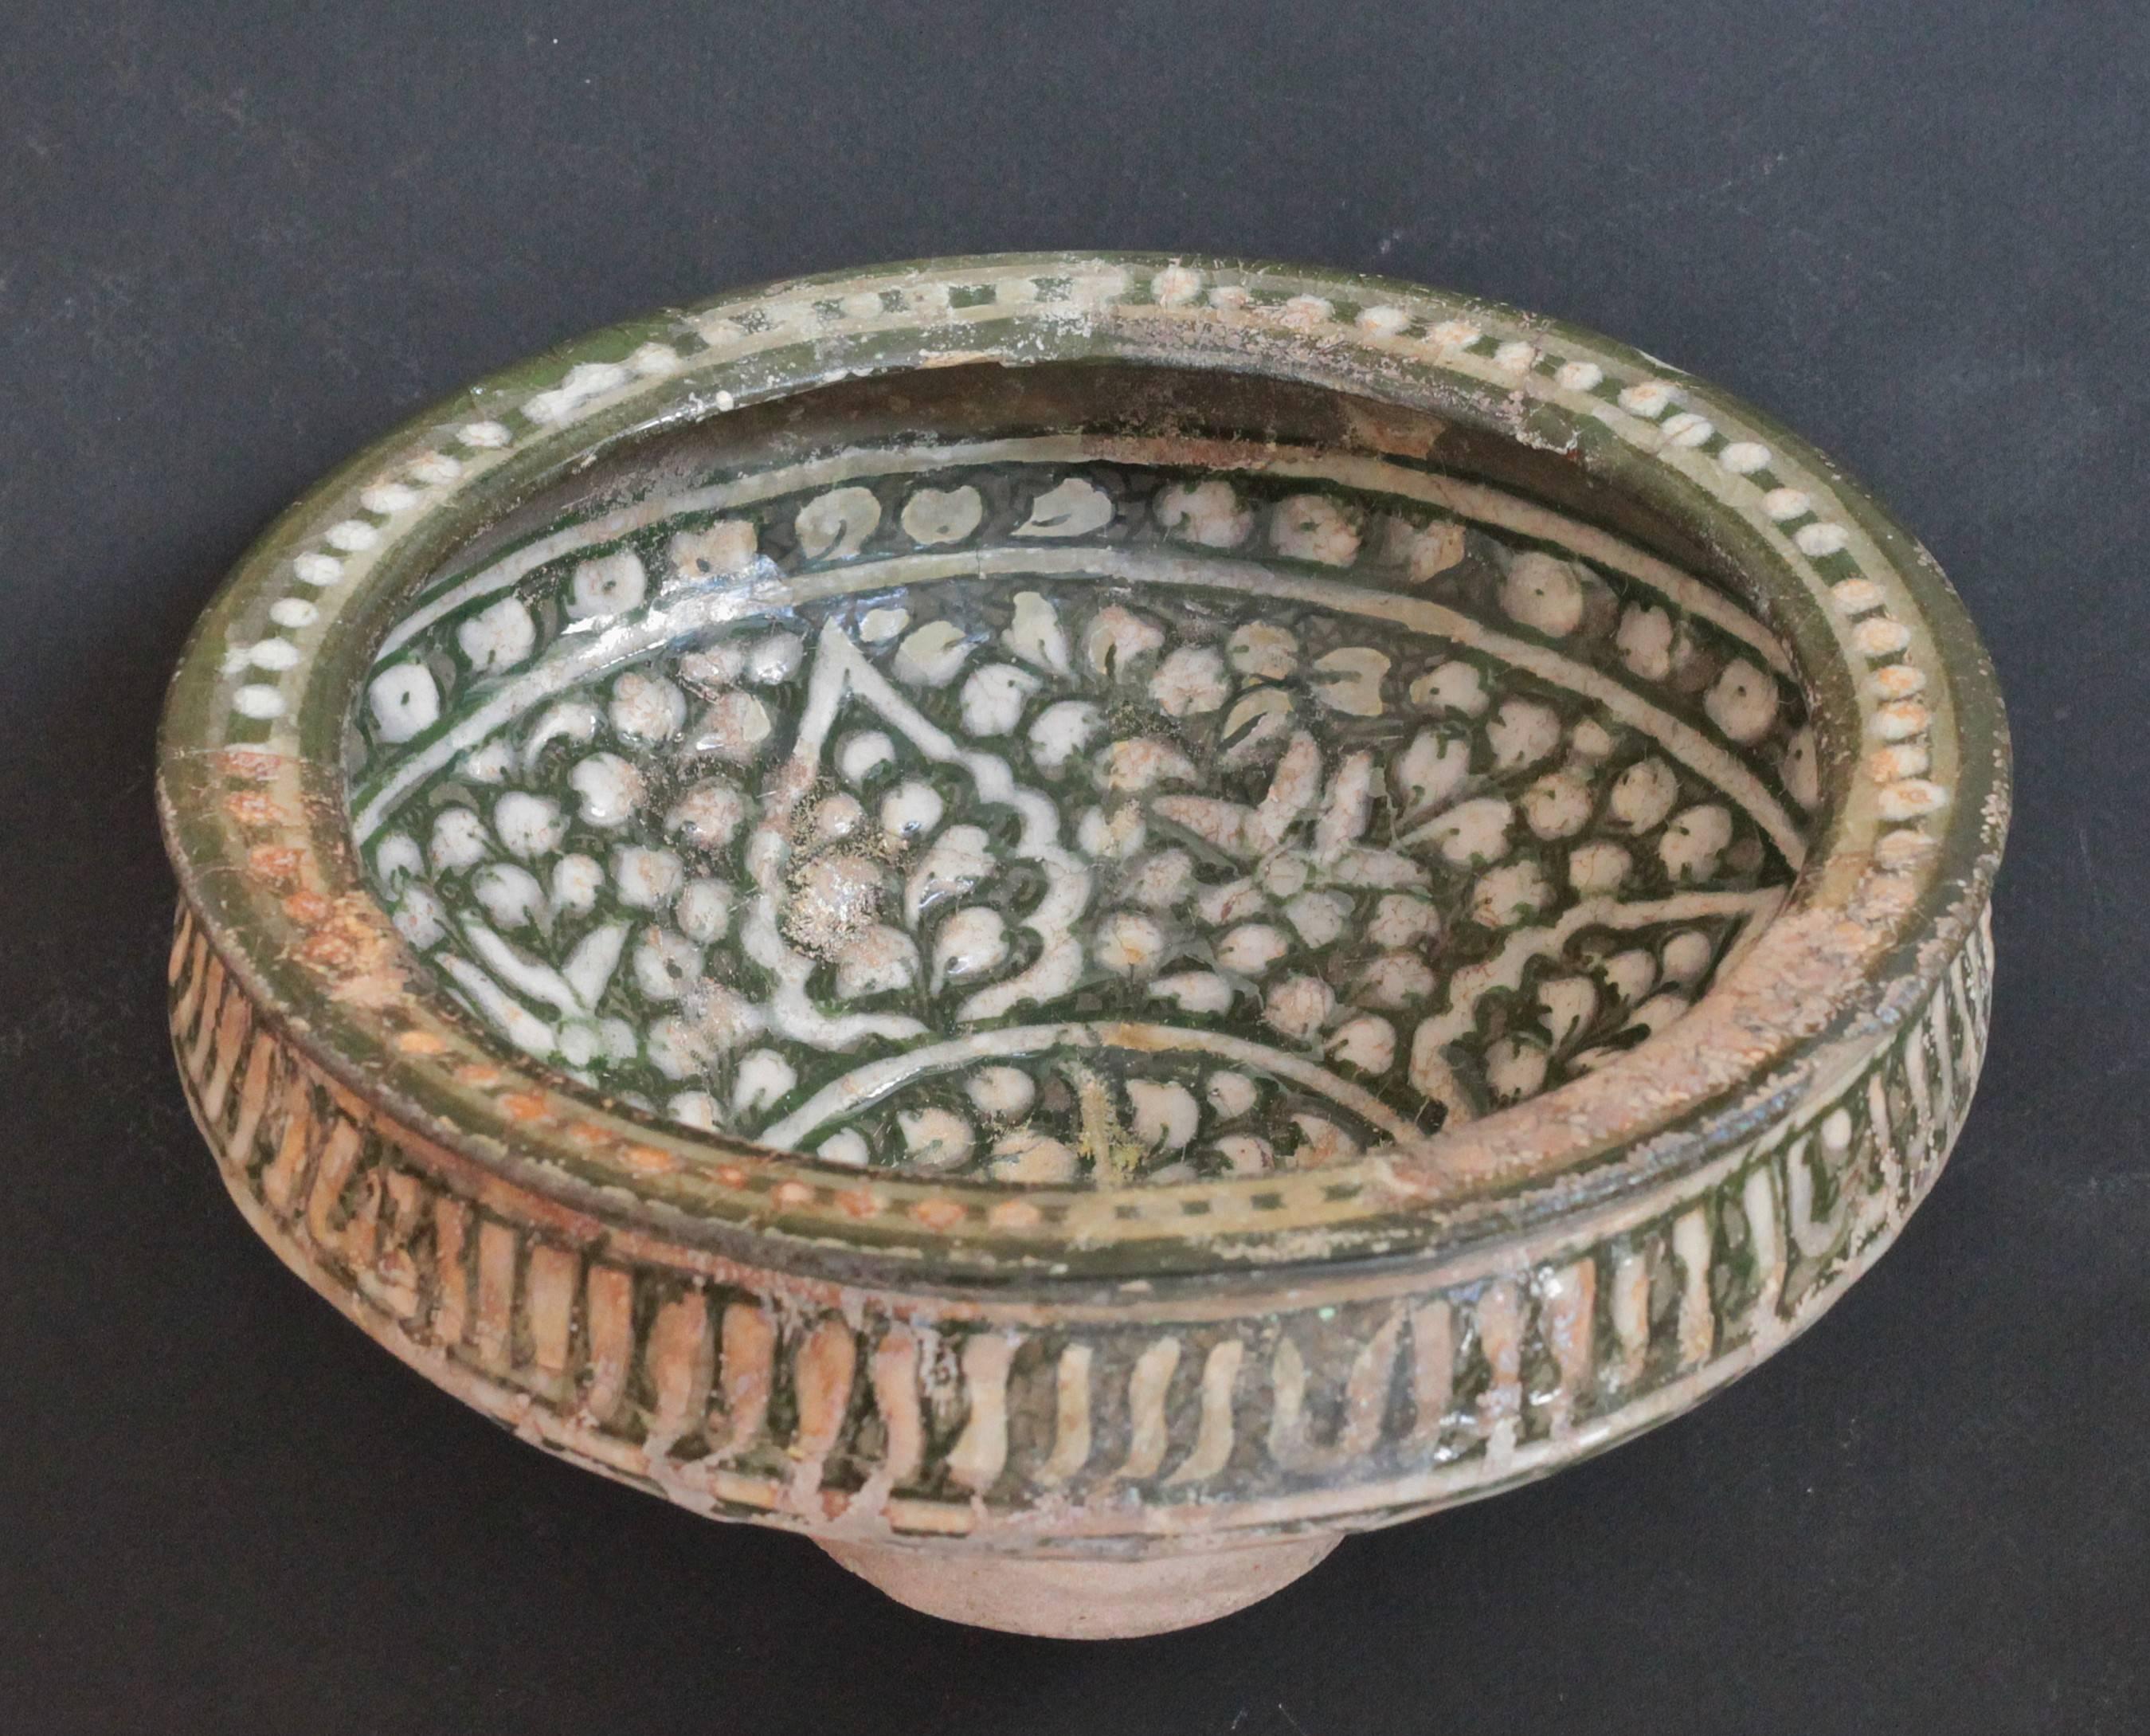 Islamic Art Ilkhanide Ceramic Bowl, 12th and 13th Centuries, Iran